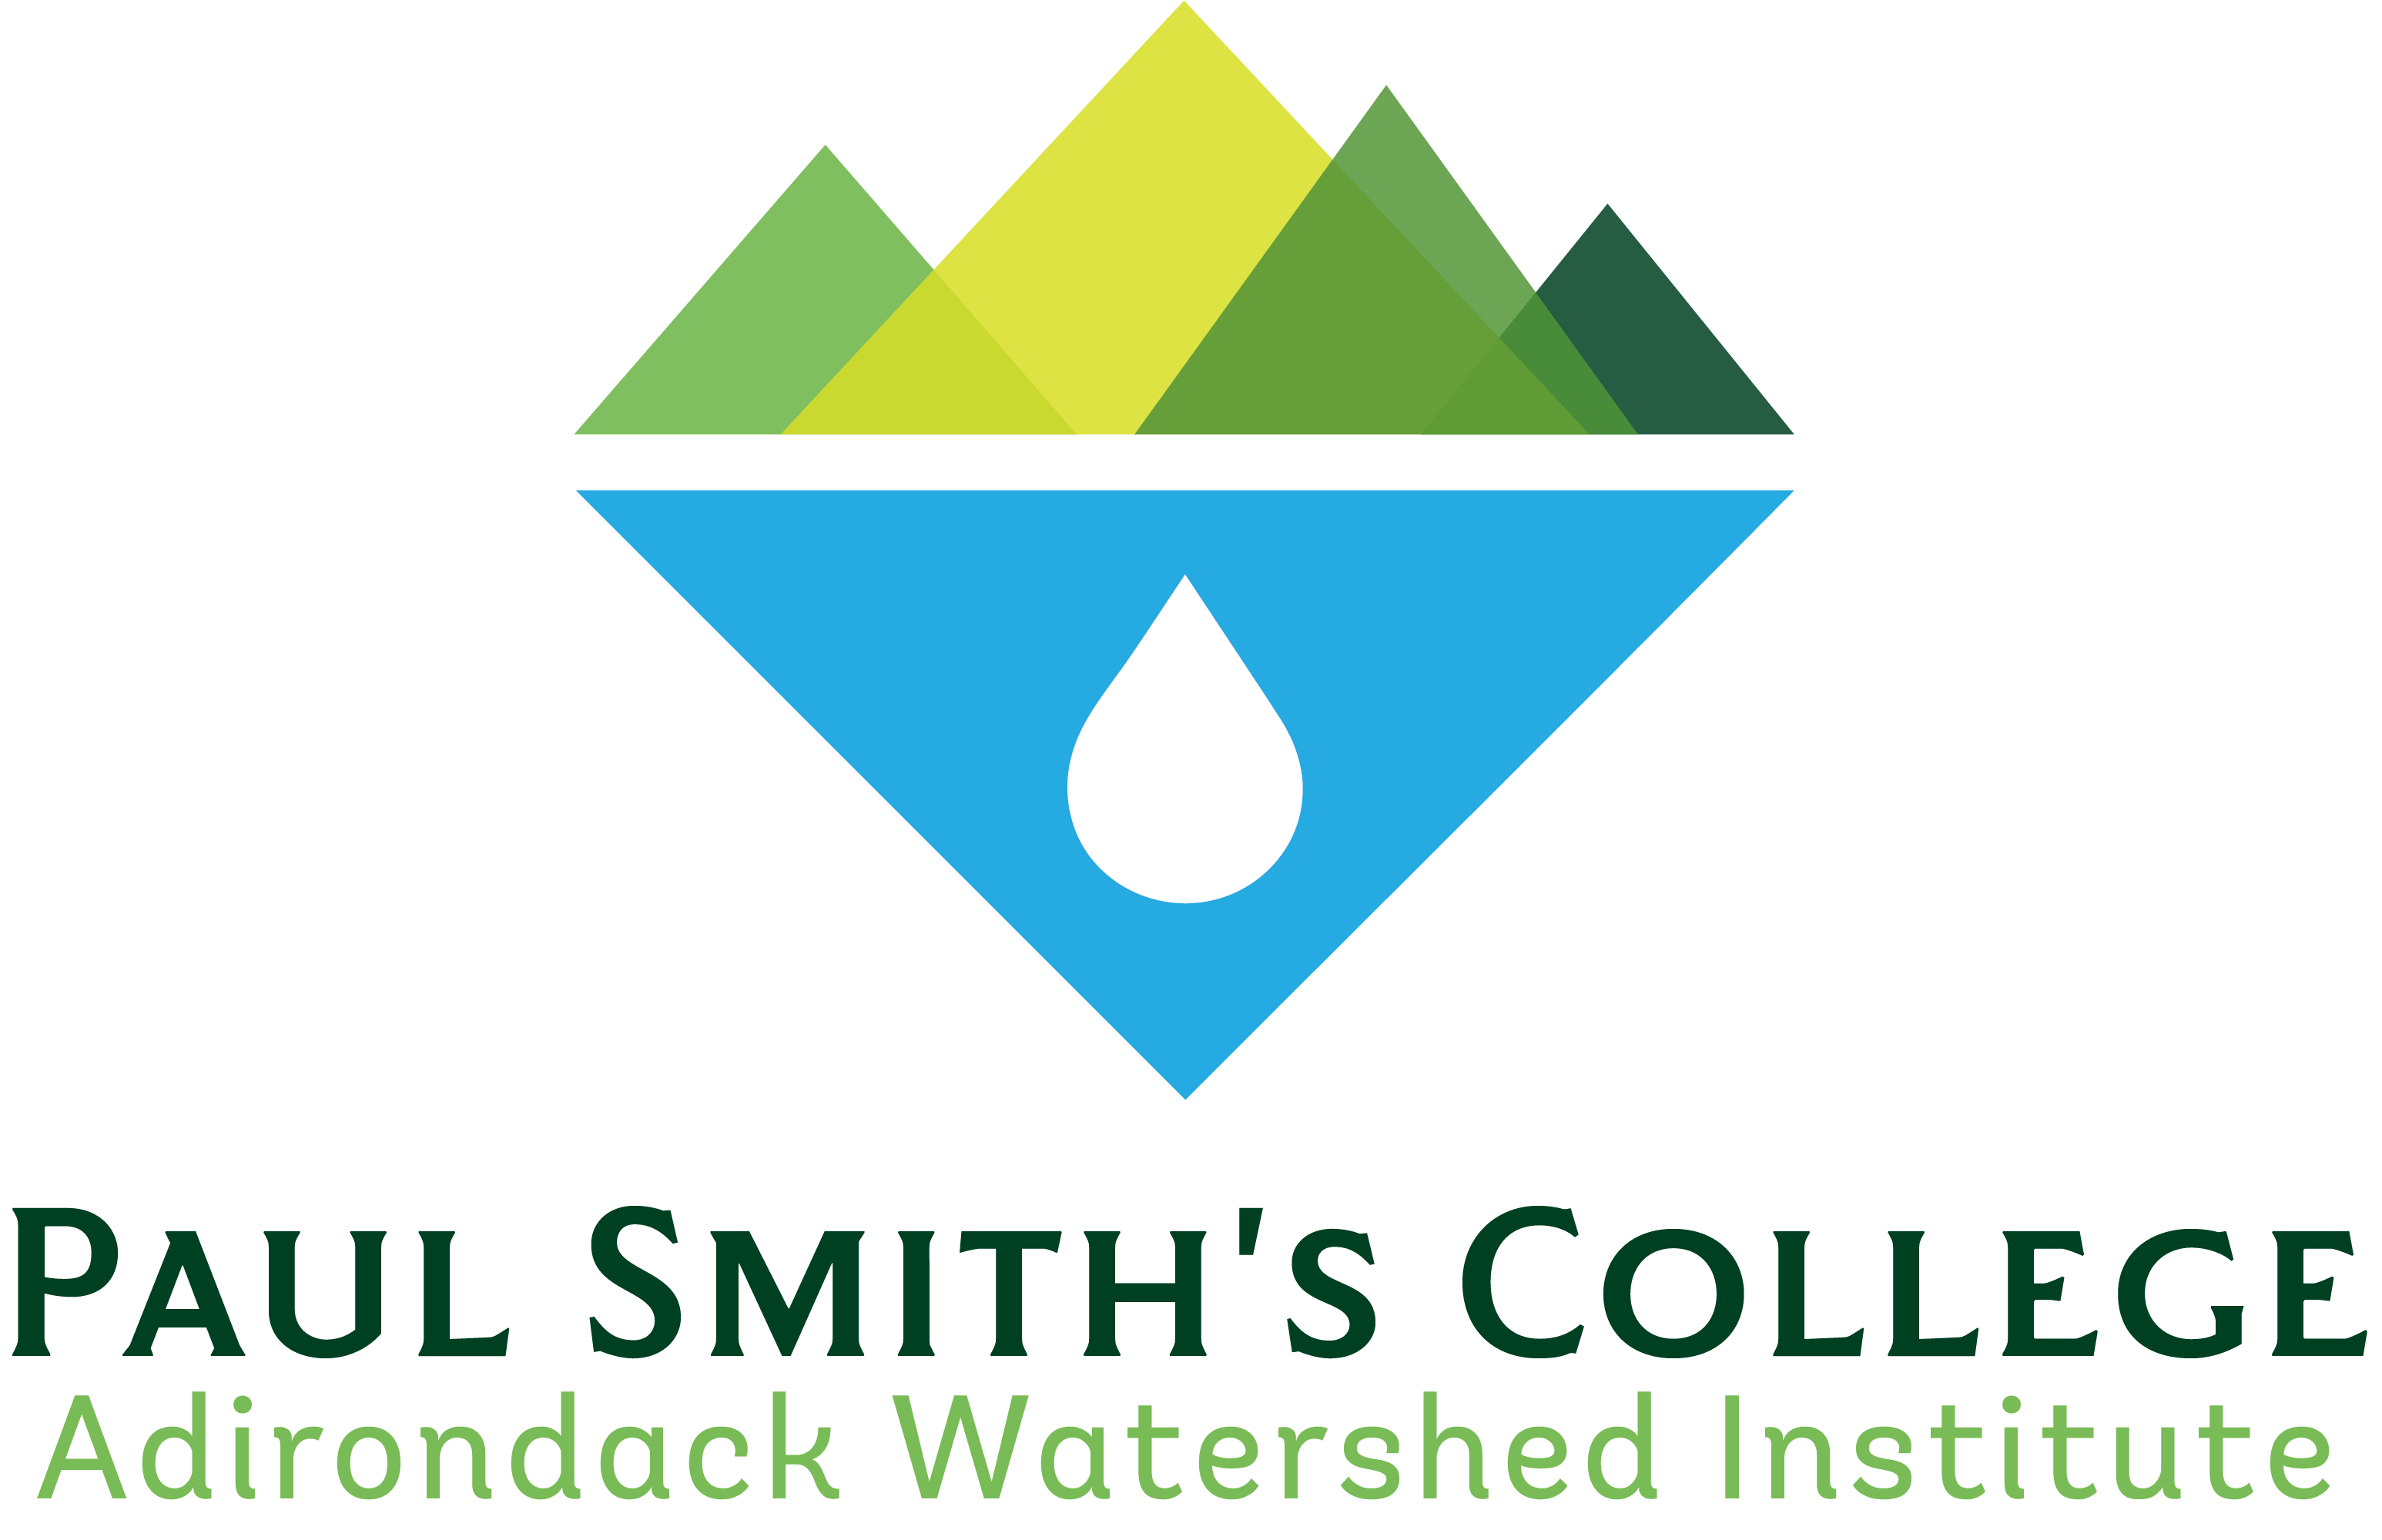 Adirondack Watershed Institute